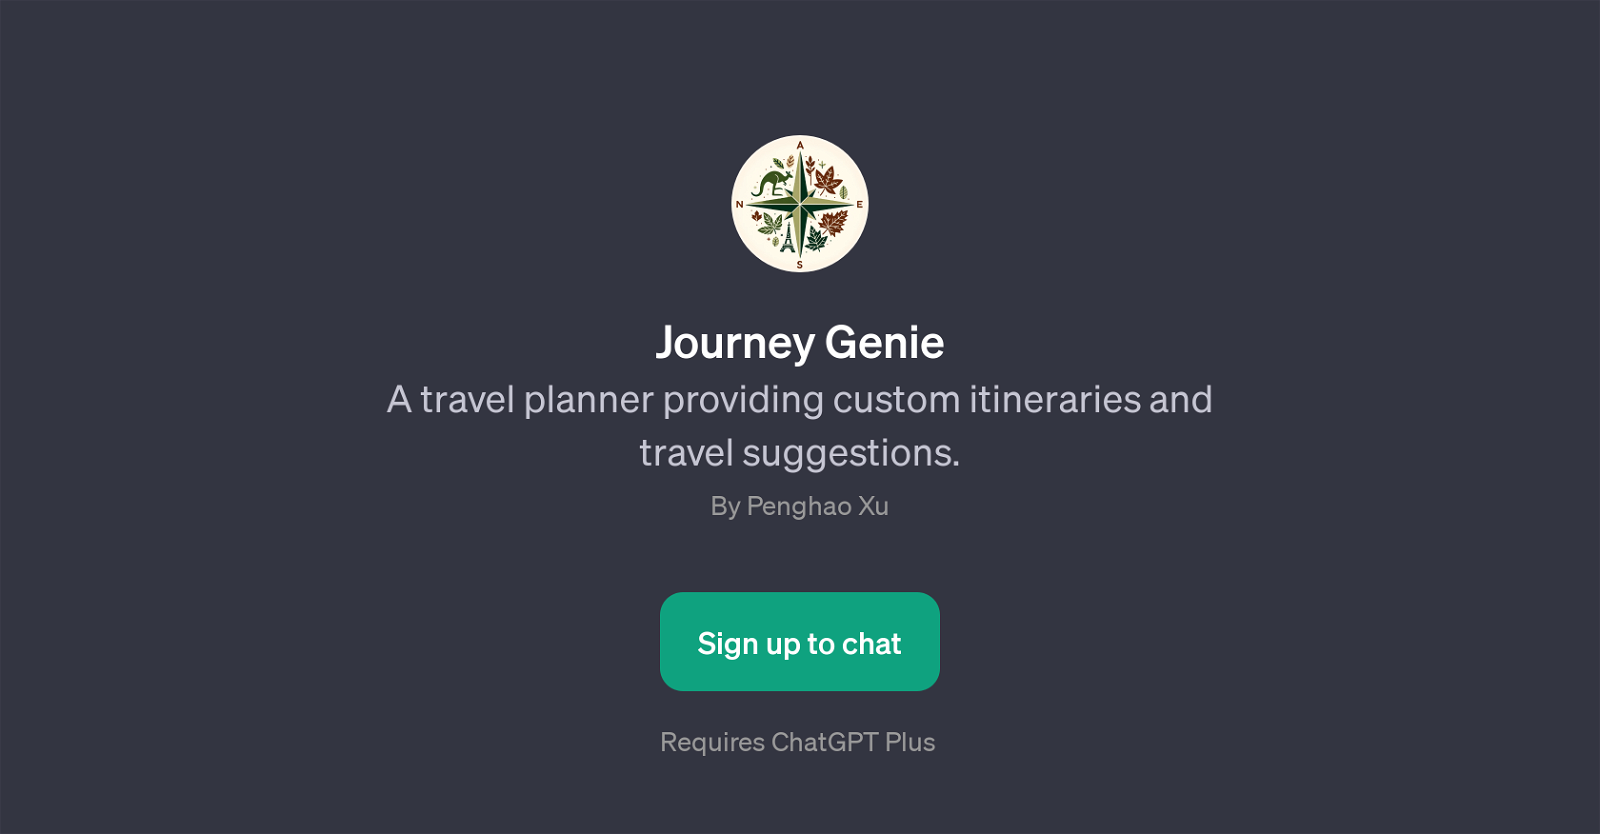 Journey Genie website